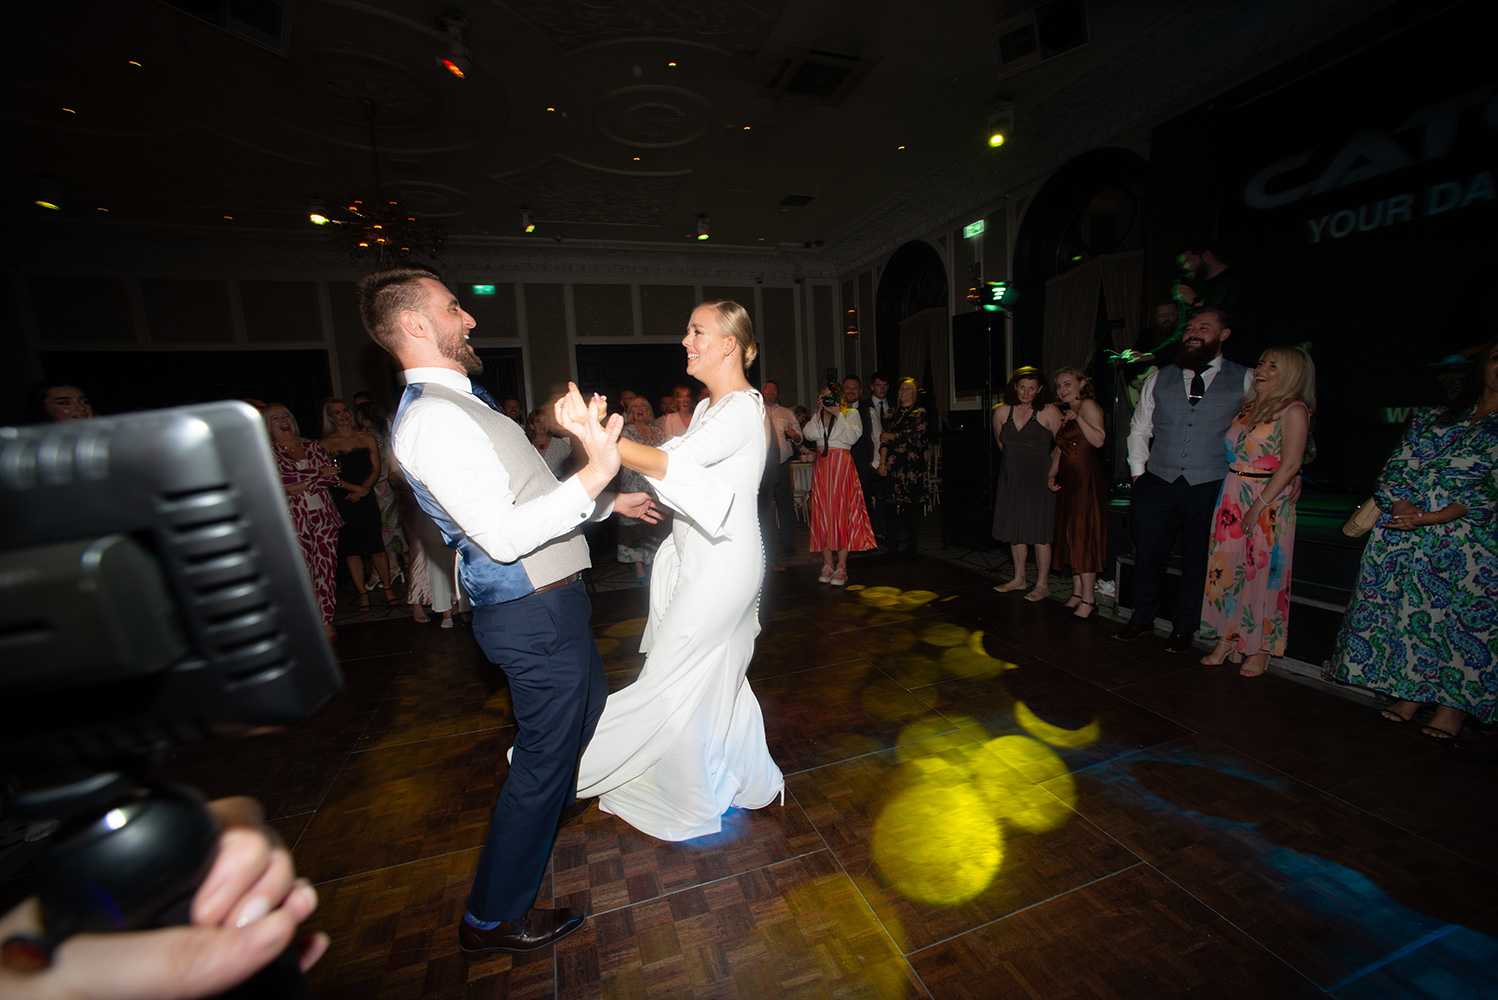 firdt dance at wedding at langtons hotel